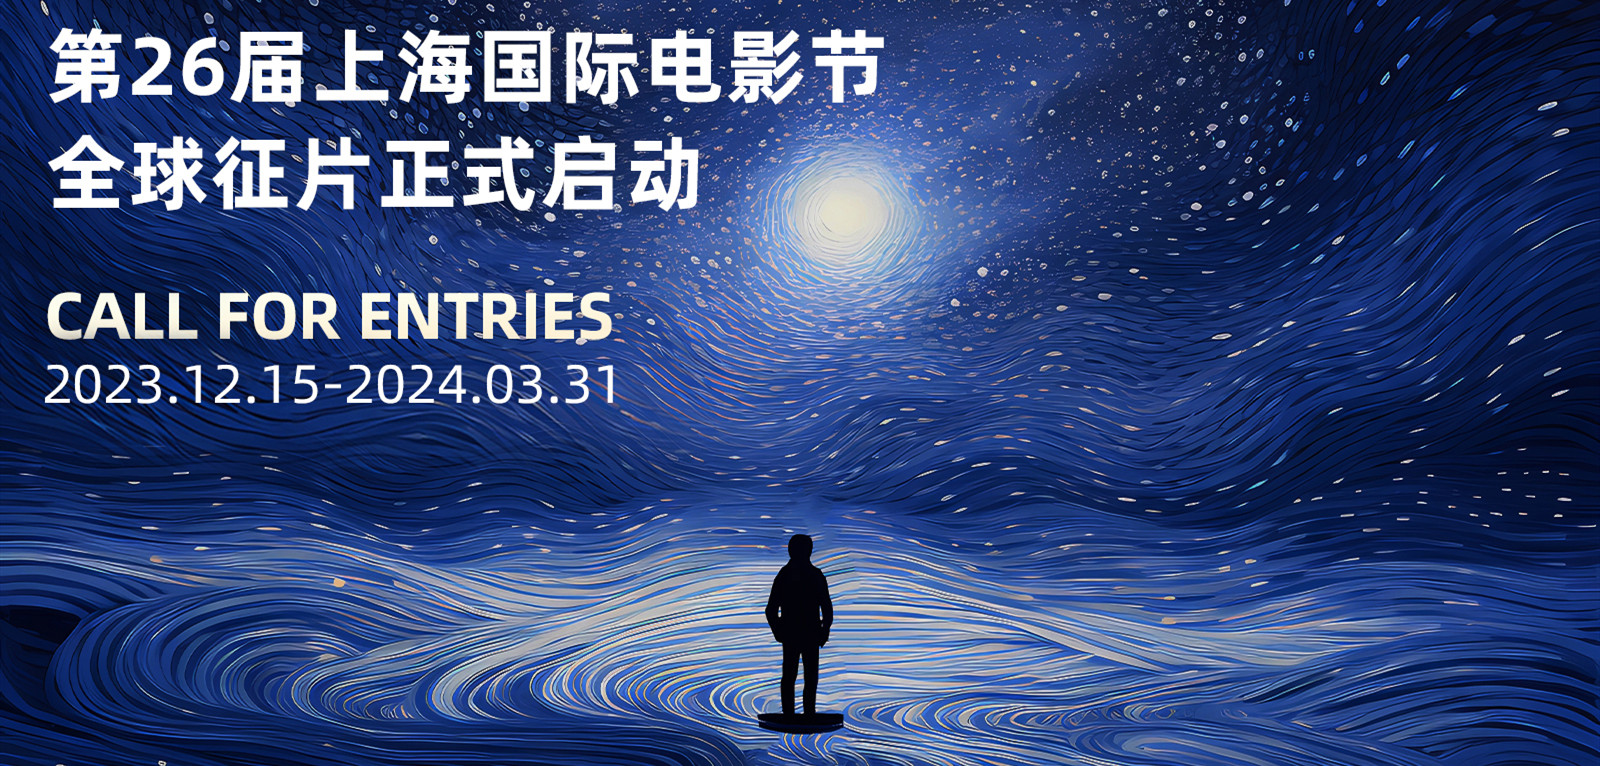 The 26th Shanghai International Film Festival Call for Entries